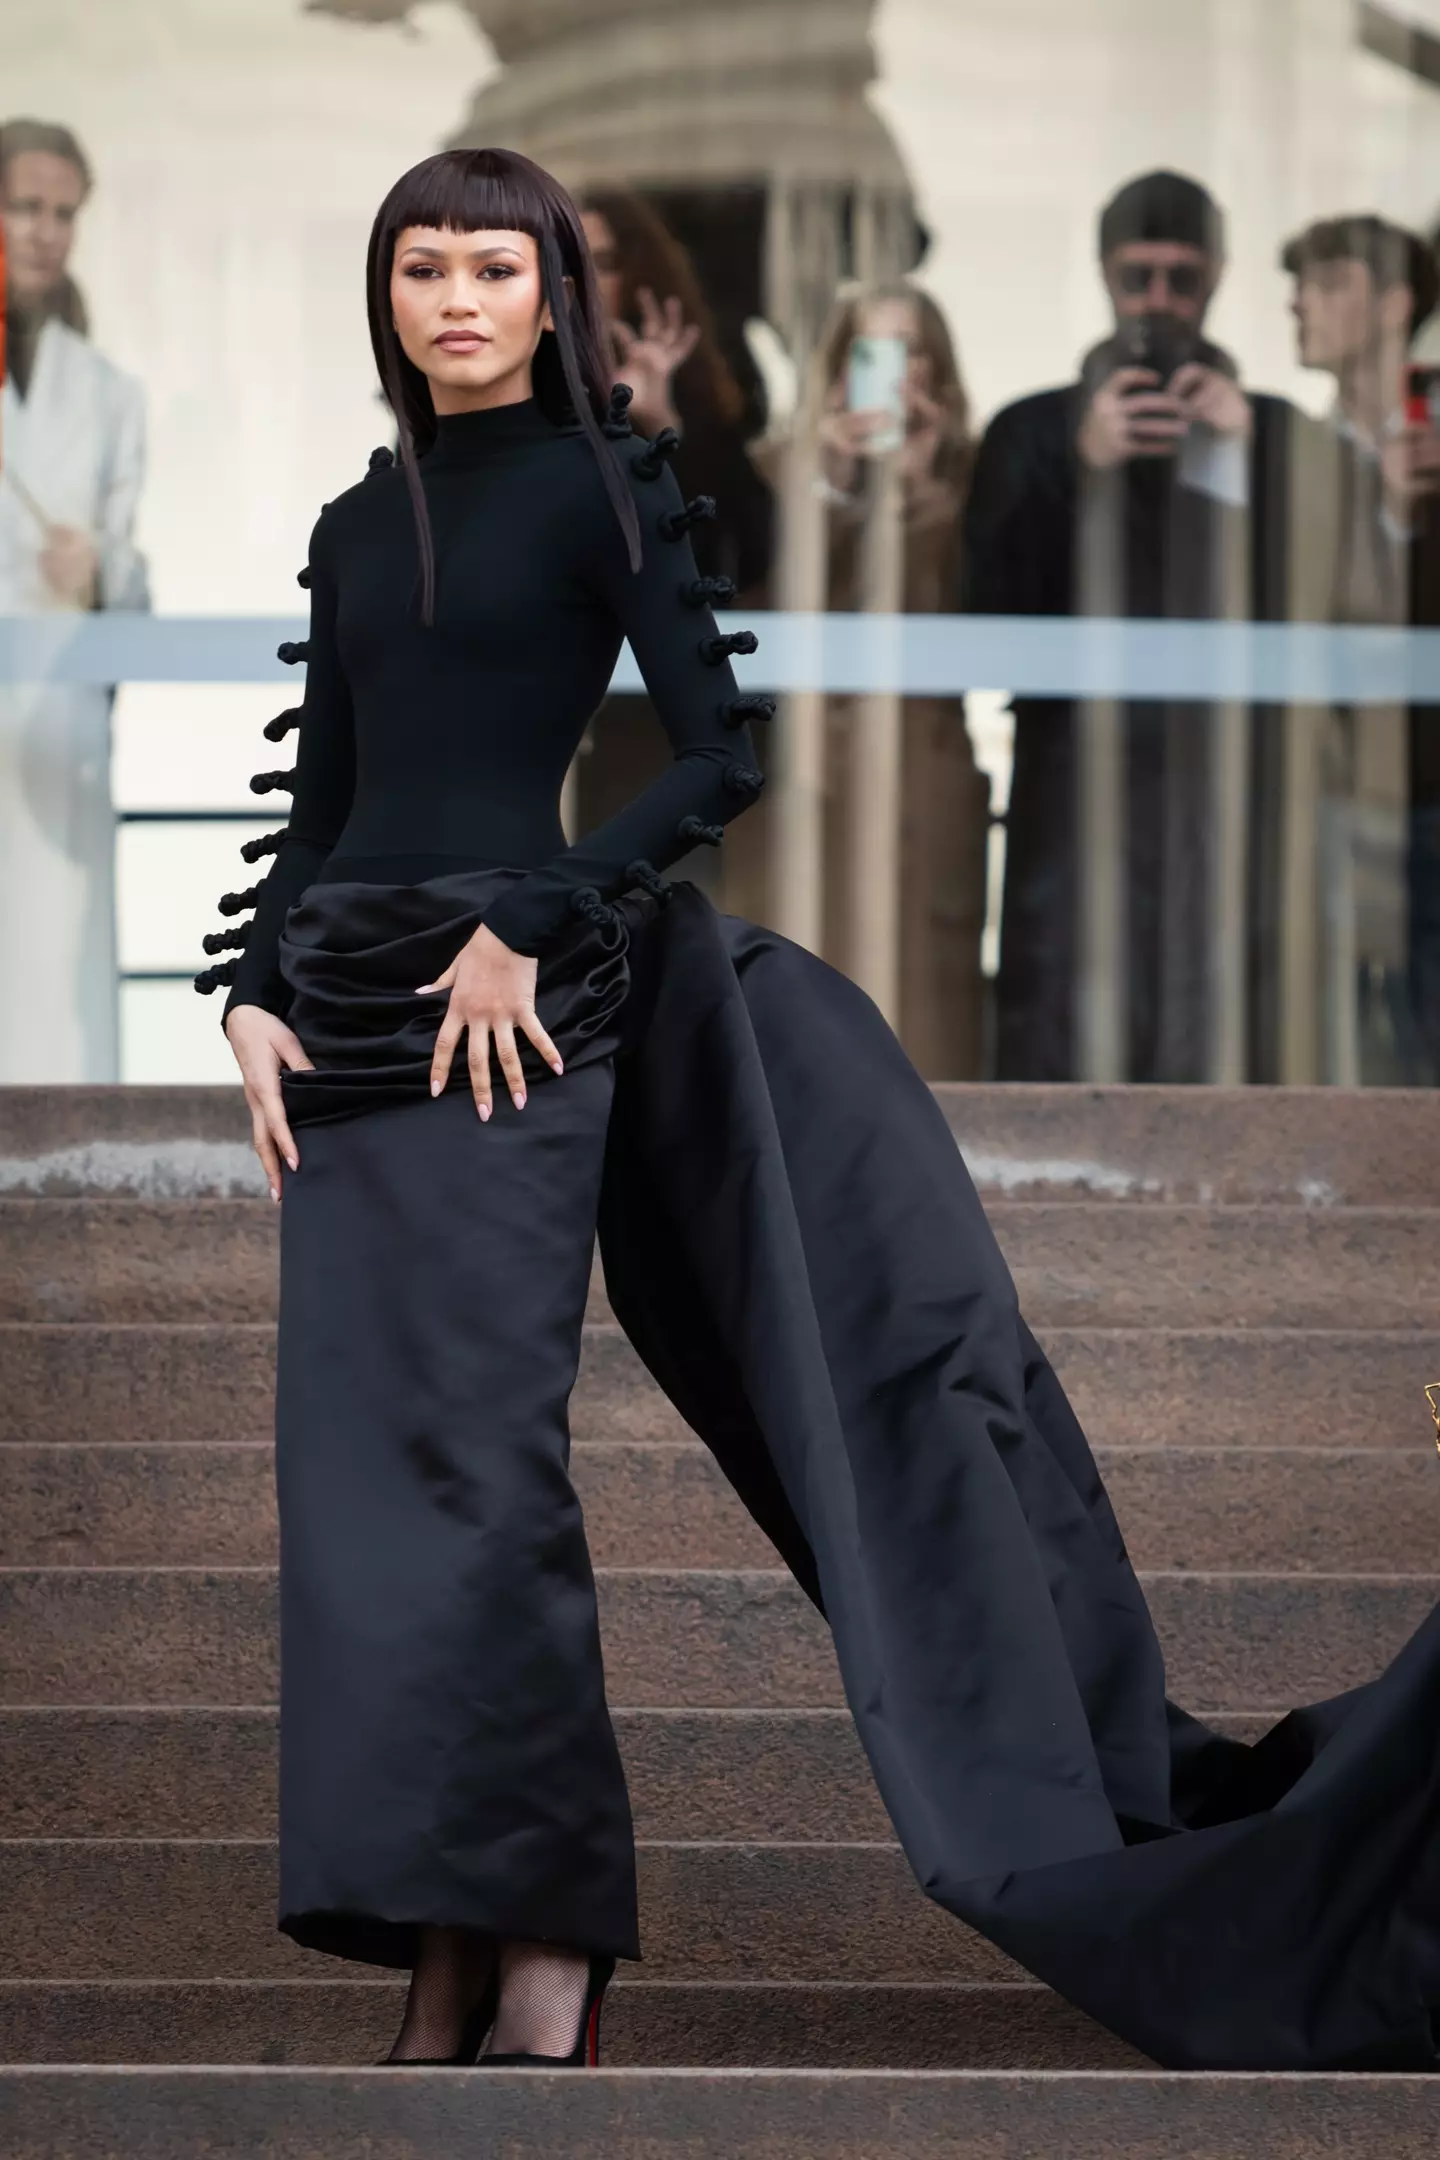 Zendaya at the Schiaparelli Haute Couture show in Paris on Monday (22 January).